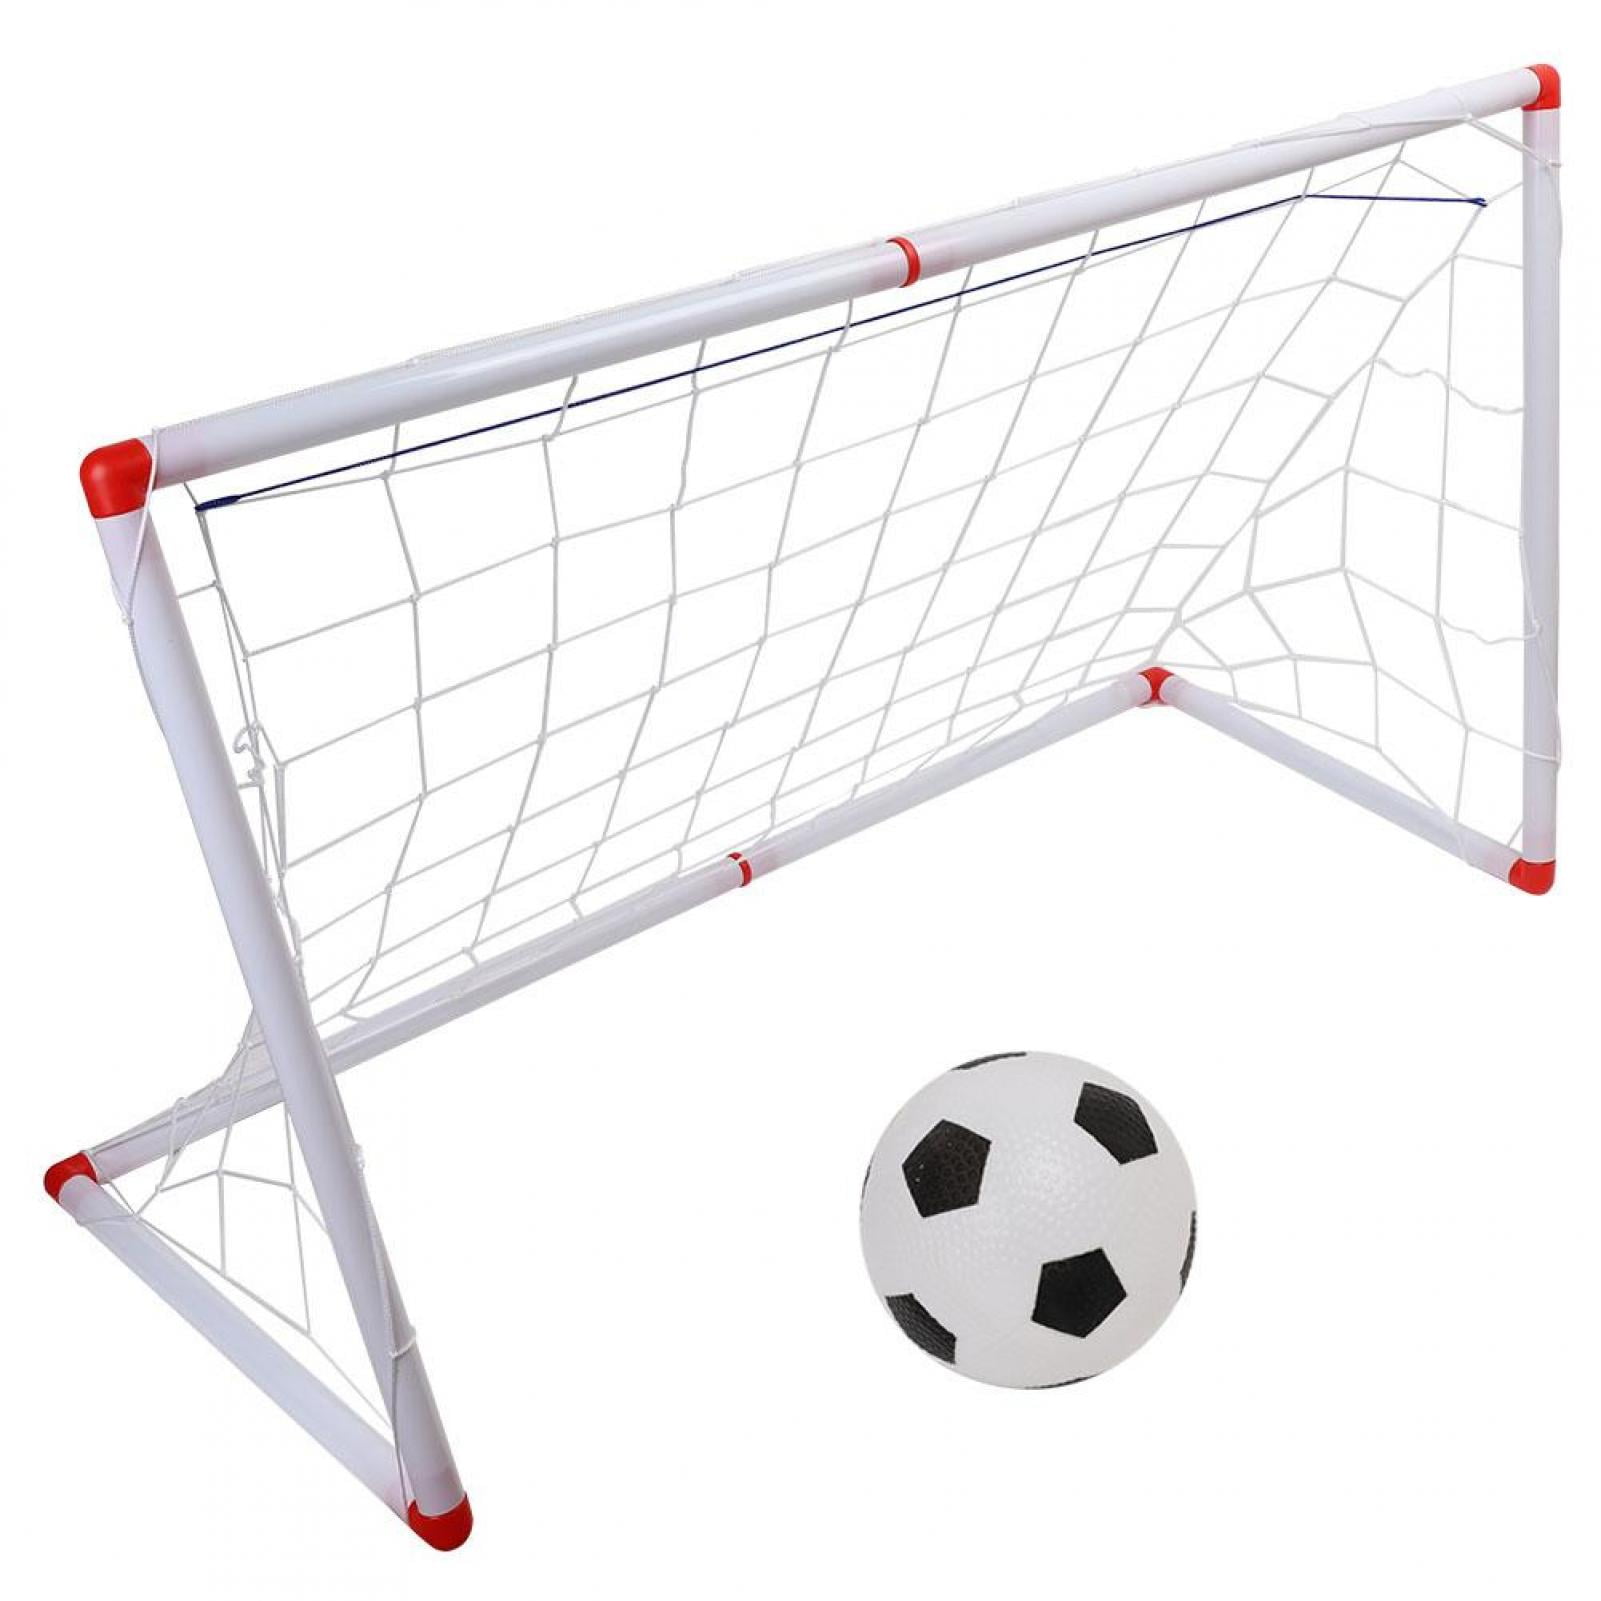 6x4ft 8x6ft 12x6ft 24x8ft Football Soccer Goal Post Rope Kids Match Training❤D 